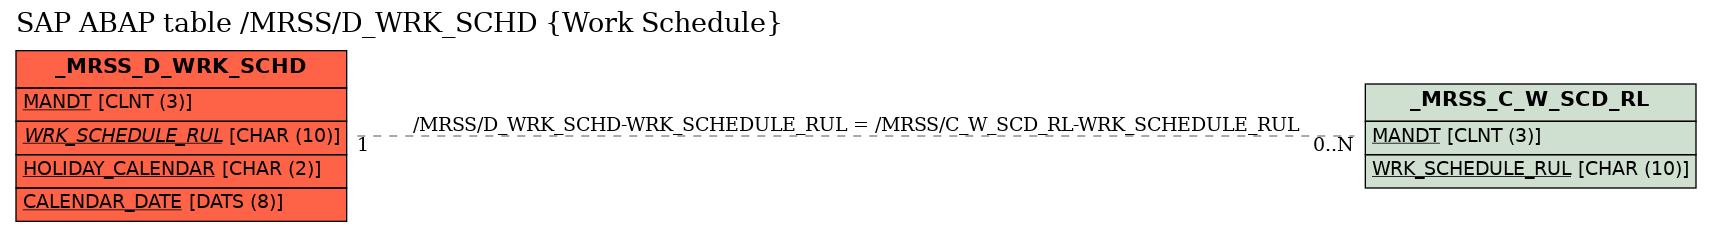 E-R Diagram for table /MRSS/D_WRK_SCHD (Work Schedule)